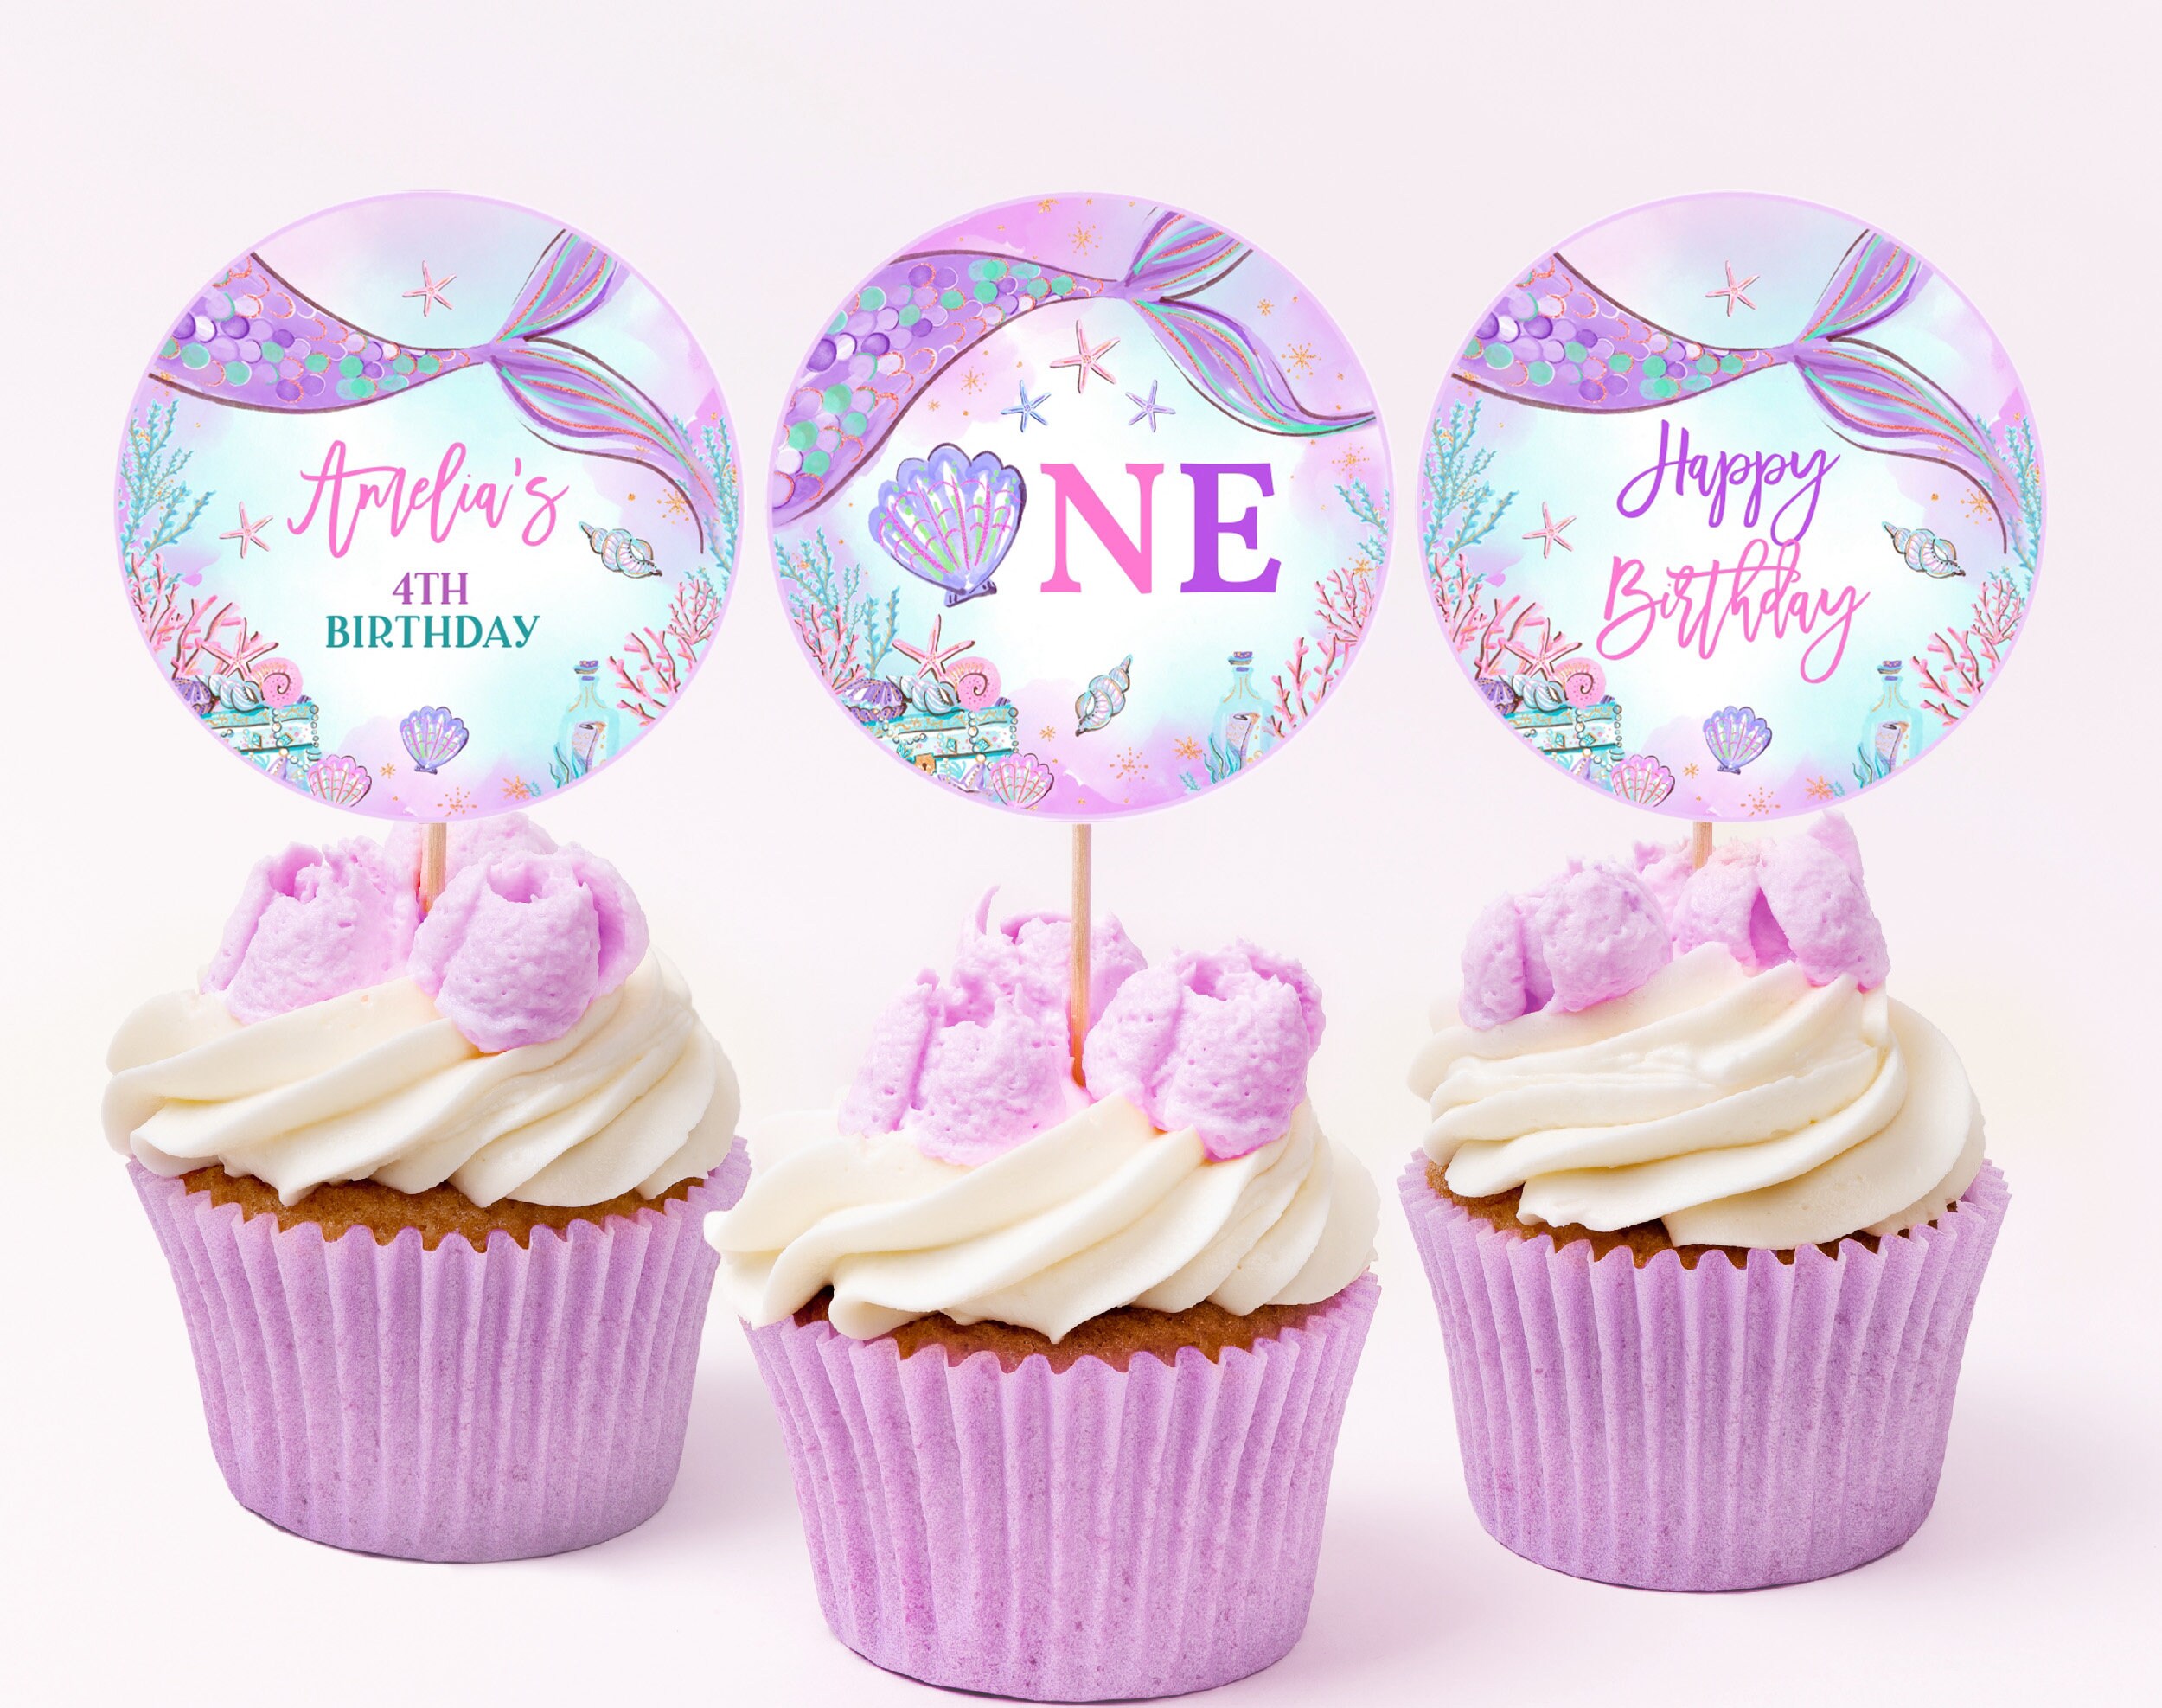 EDIBLE Barbie Mermaids Birthday Wafer Personalized Cake Topper 7.5 (uncut)